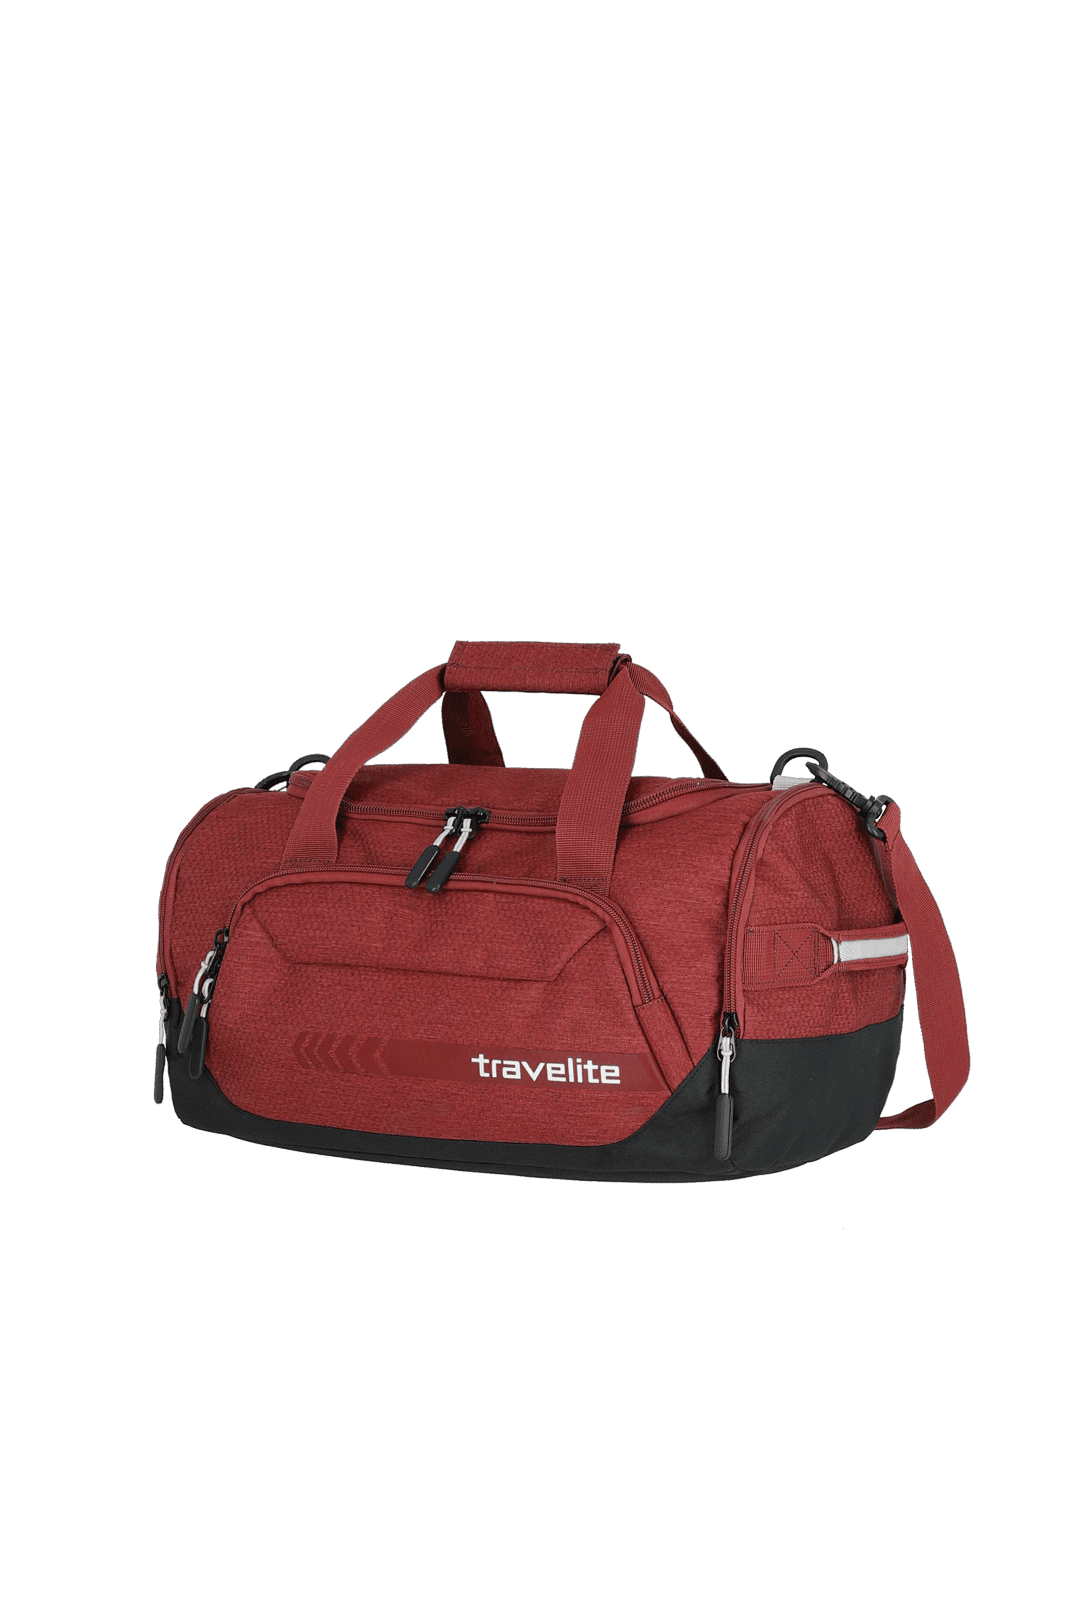 Travel bag S